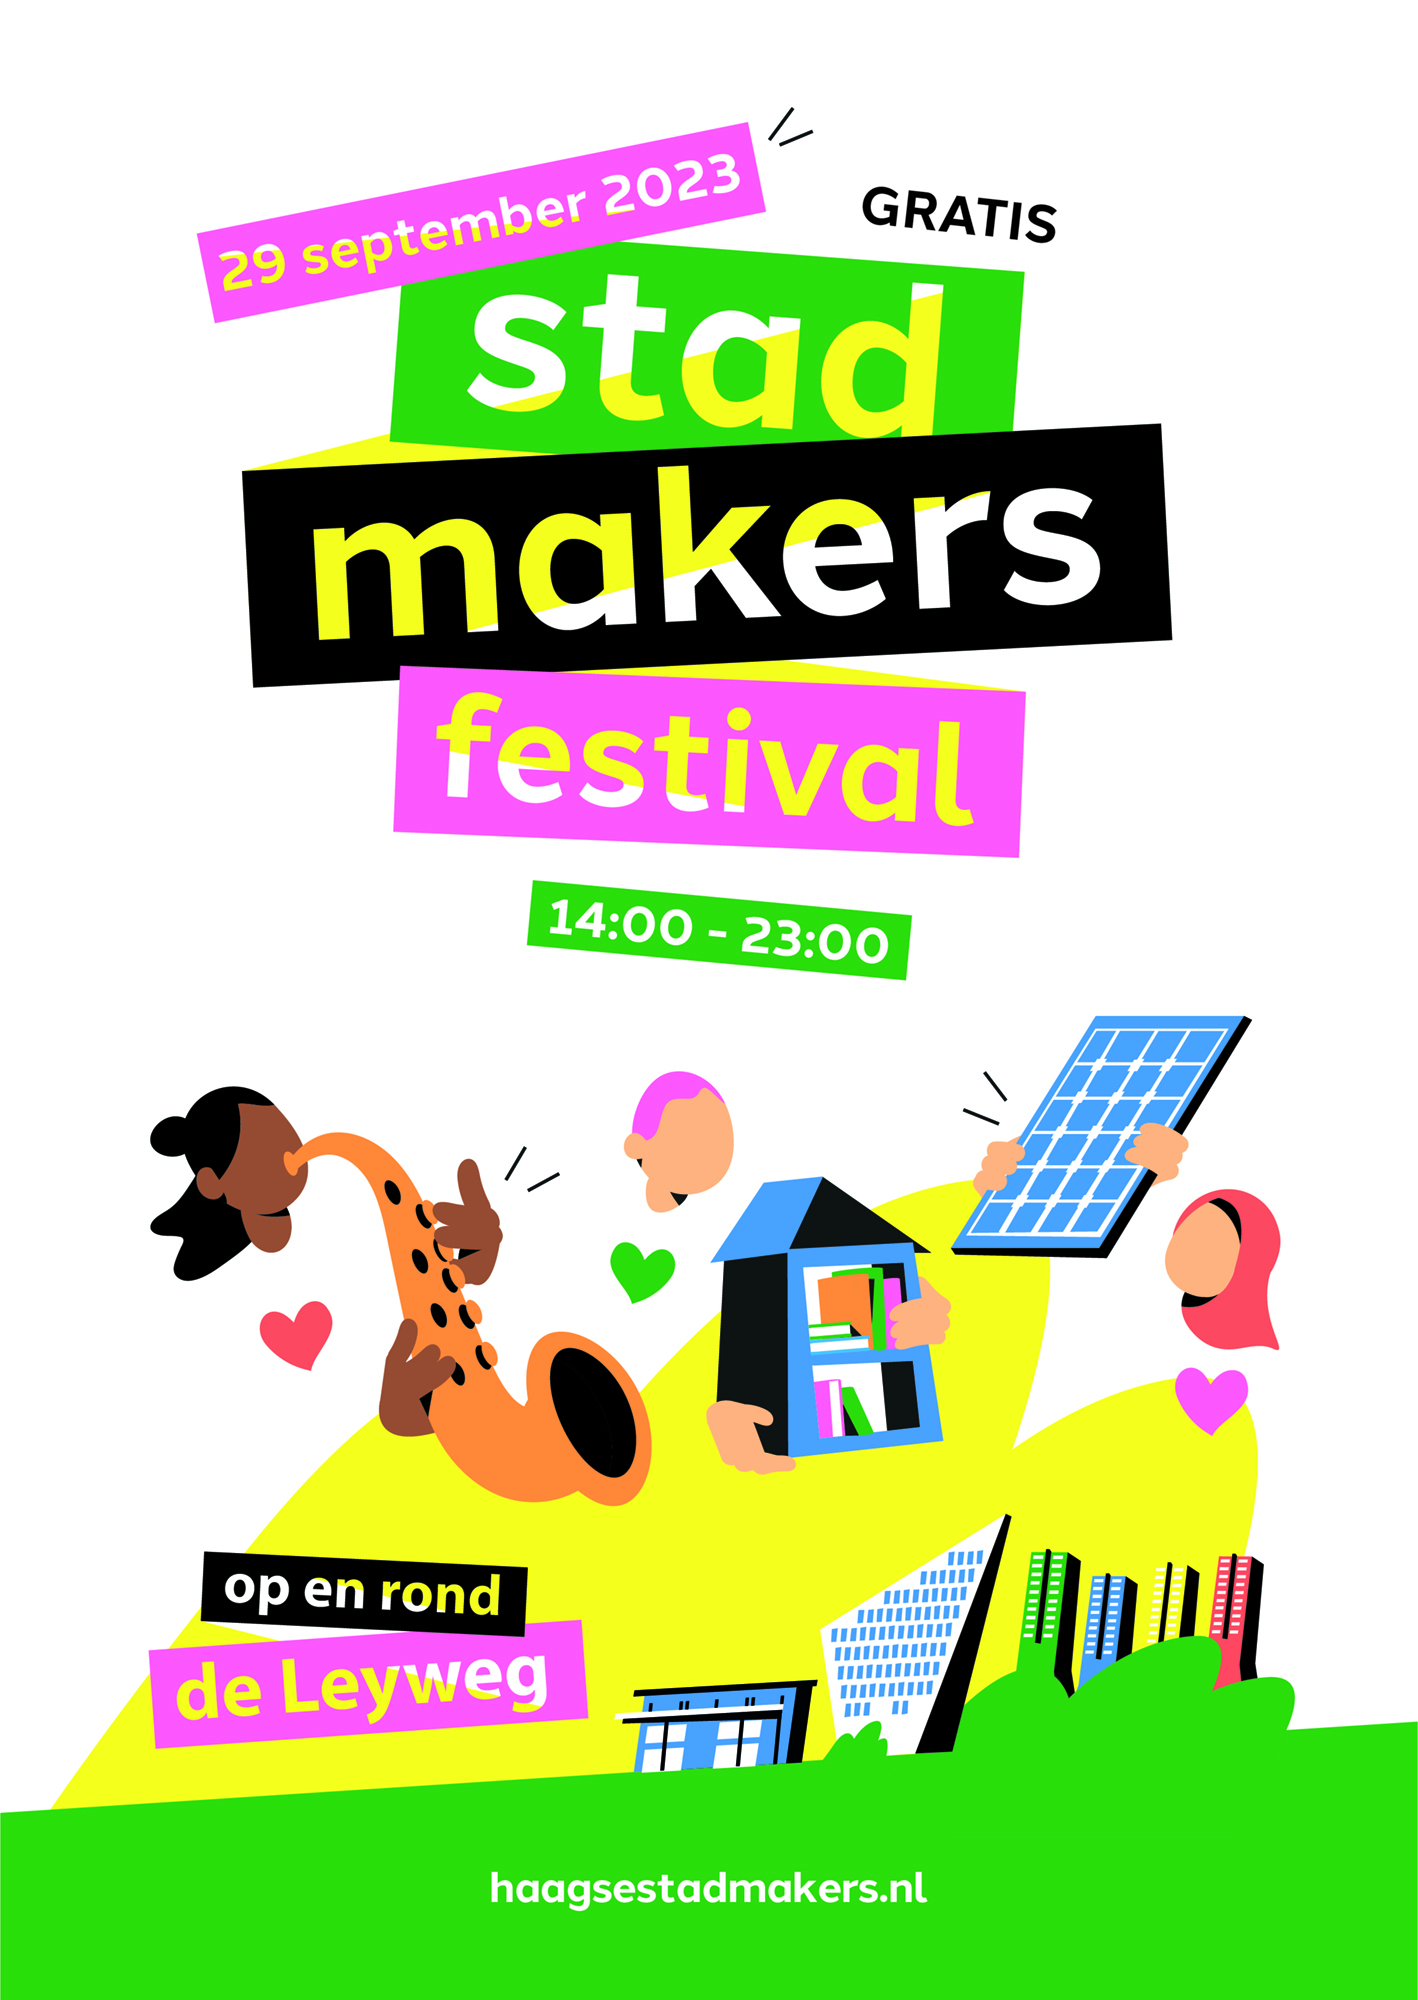 Evening programme Stadmakersfestival [FREE]